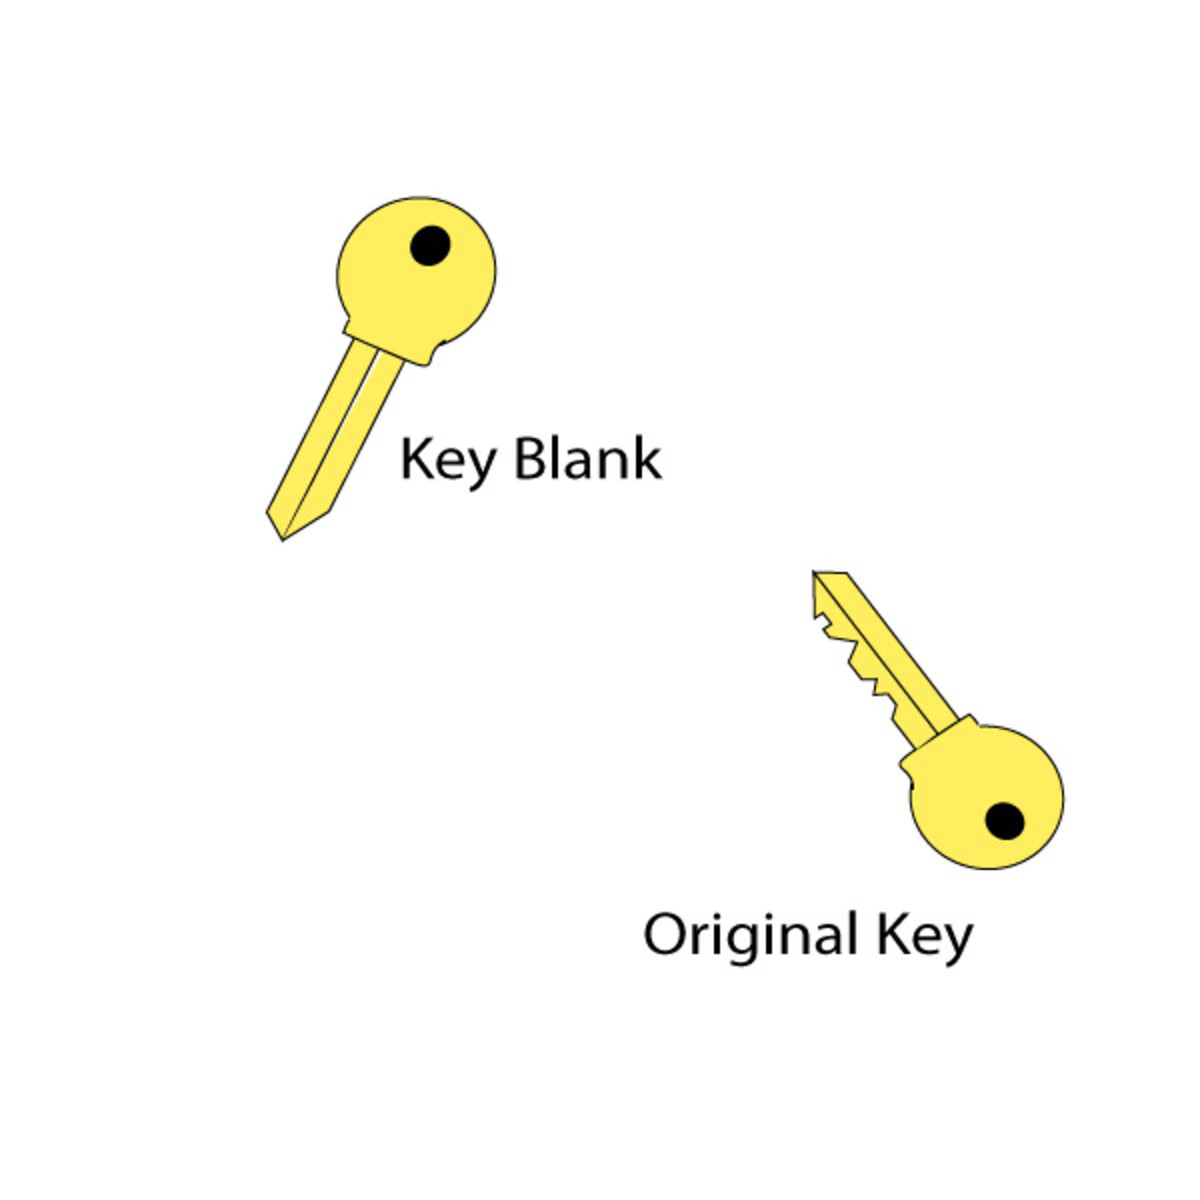 Key Blank vs. Original Key.